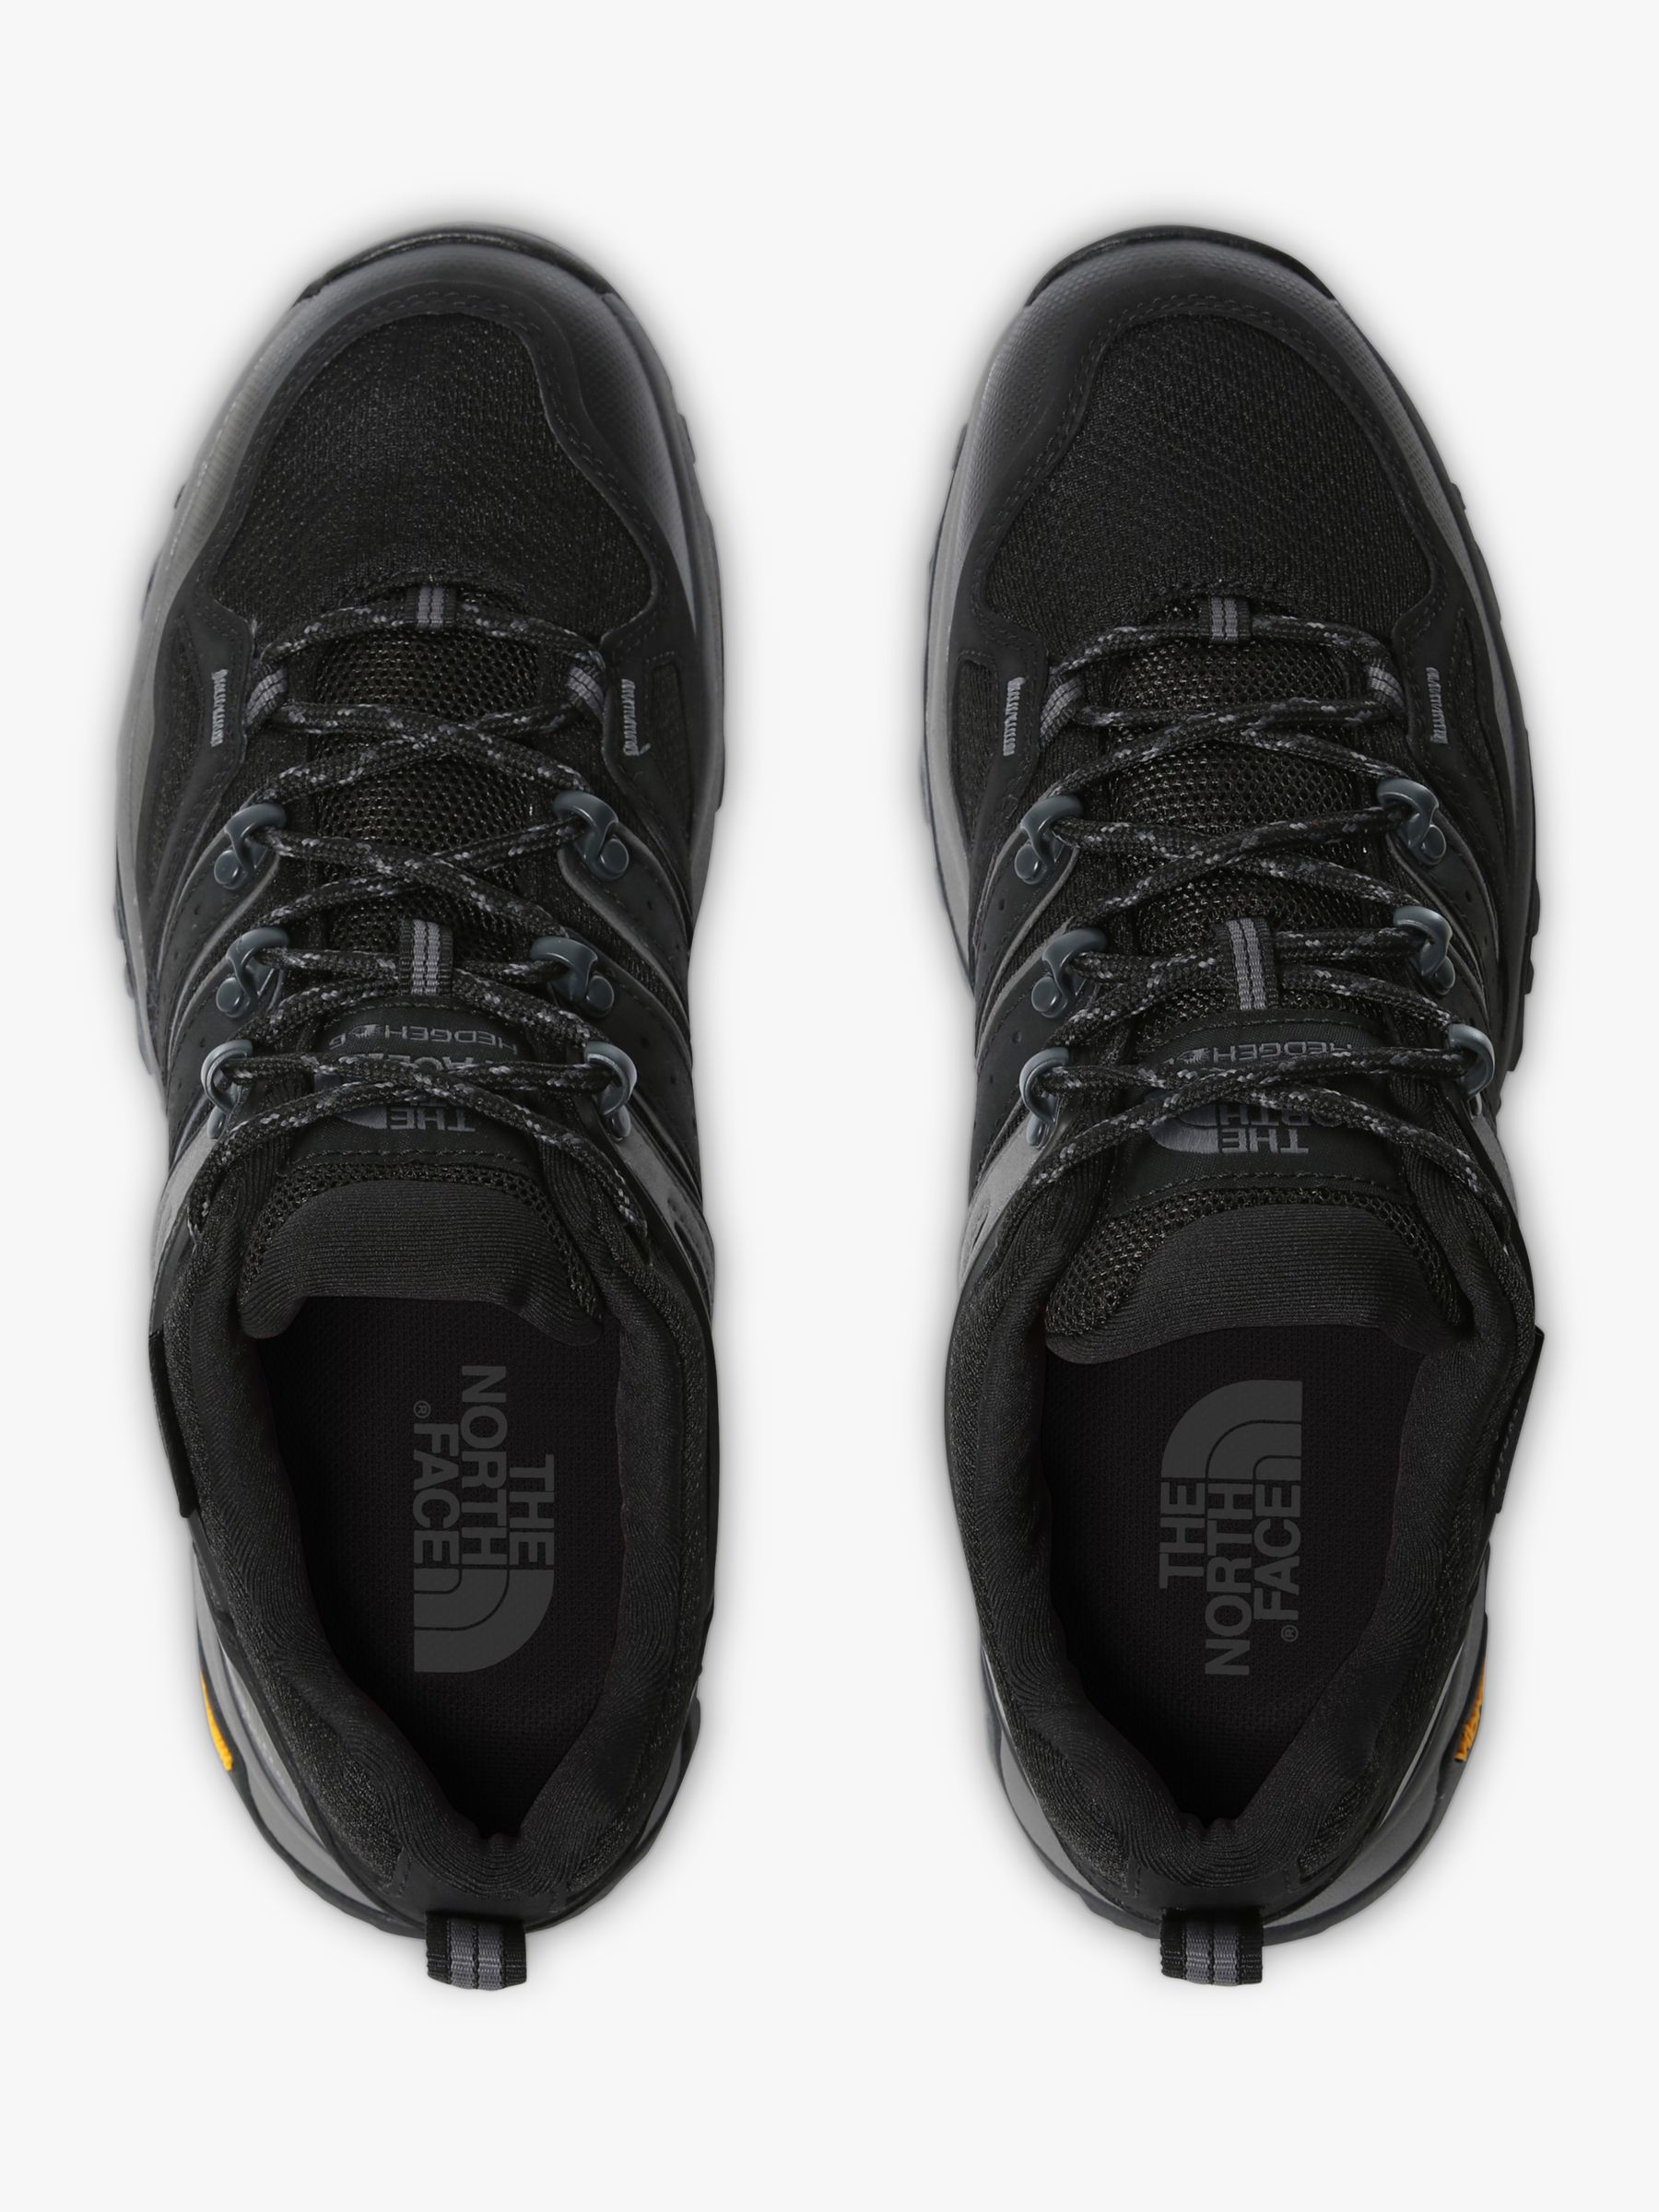 Buy The North Face Hedgehog Futurelight Hiking Shoes, Black/Zinc Grey Online at johnlewis.com